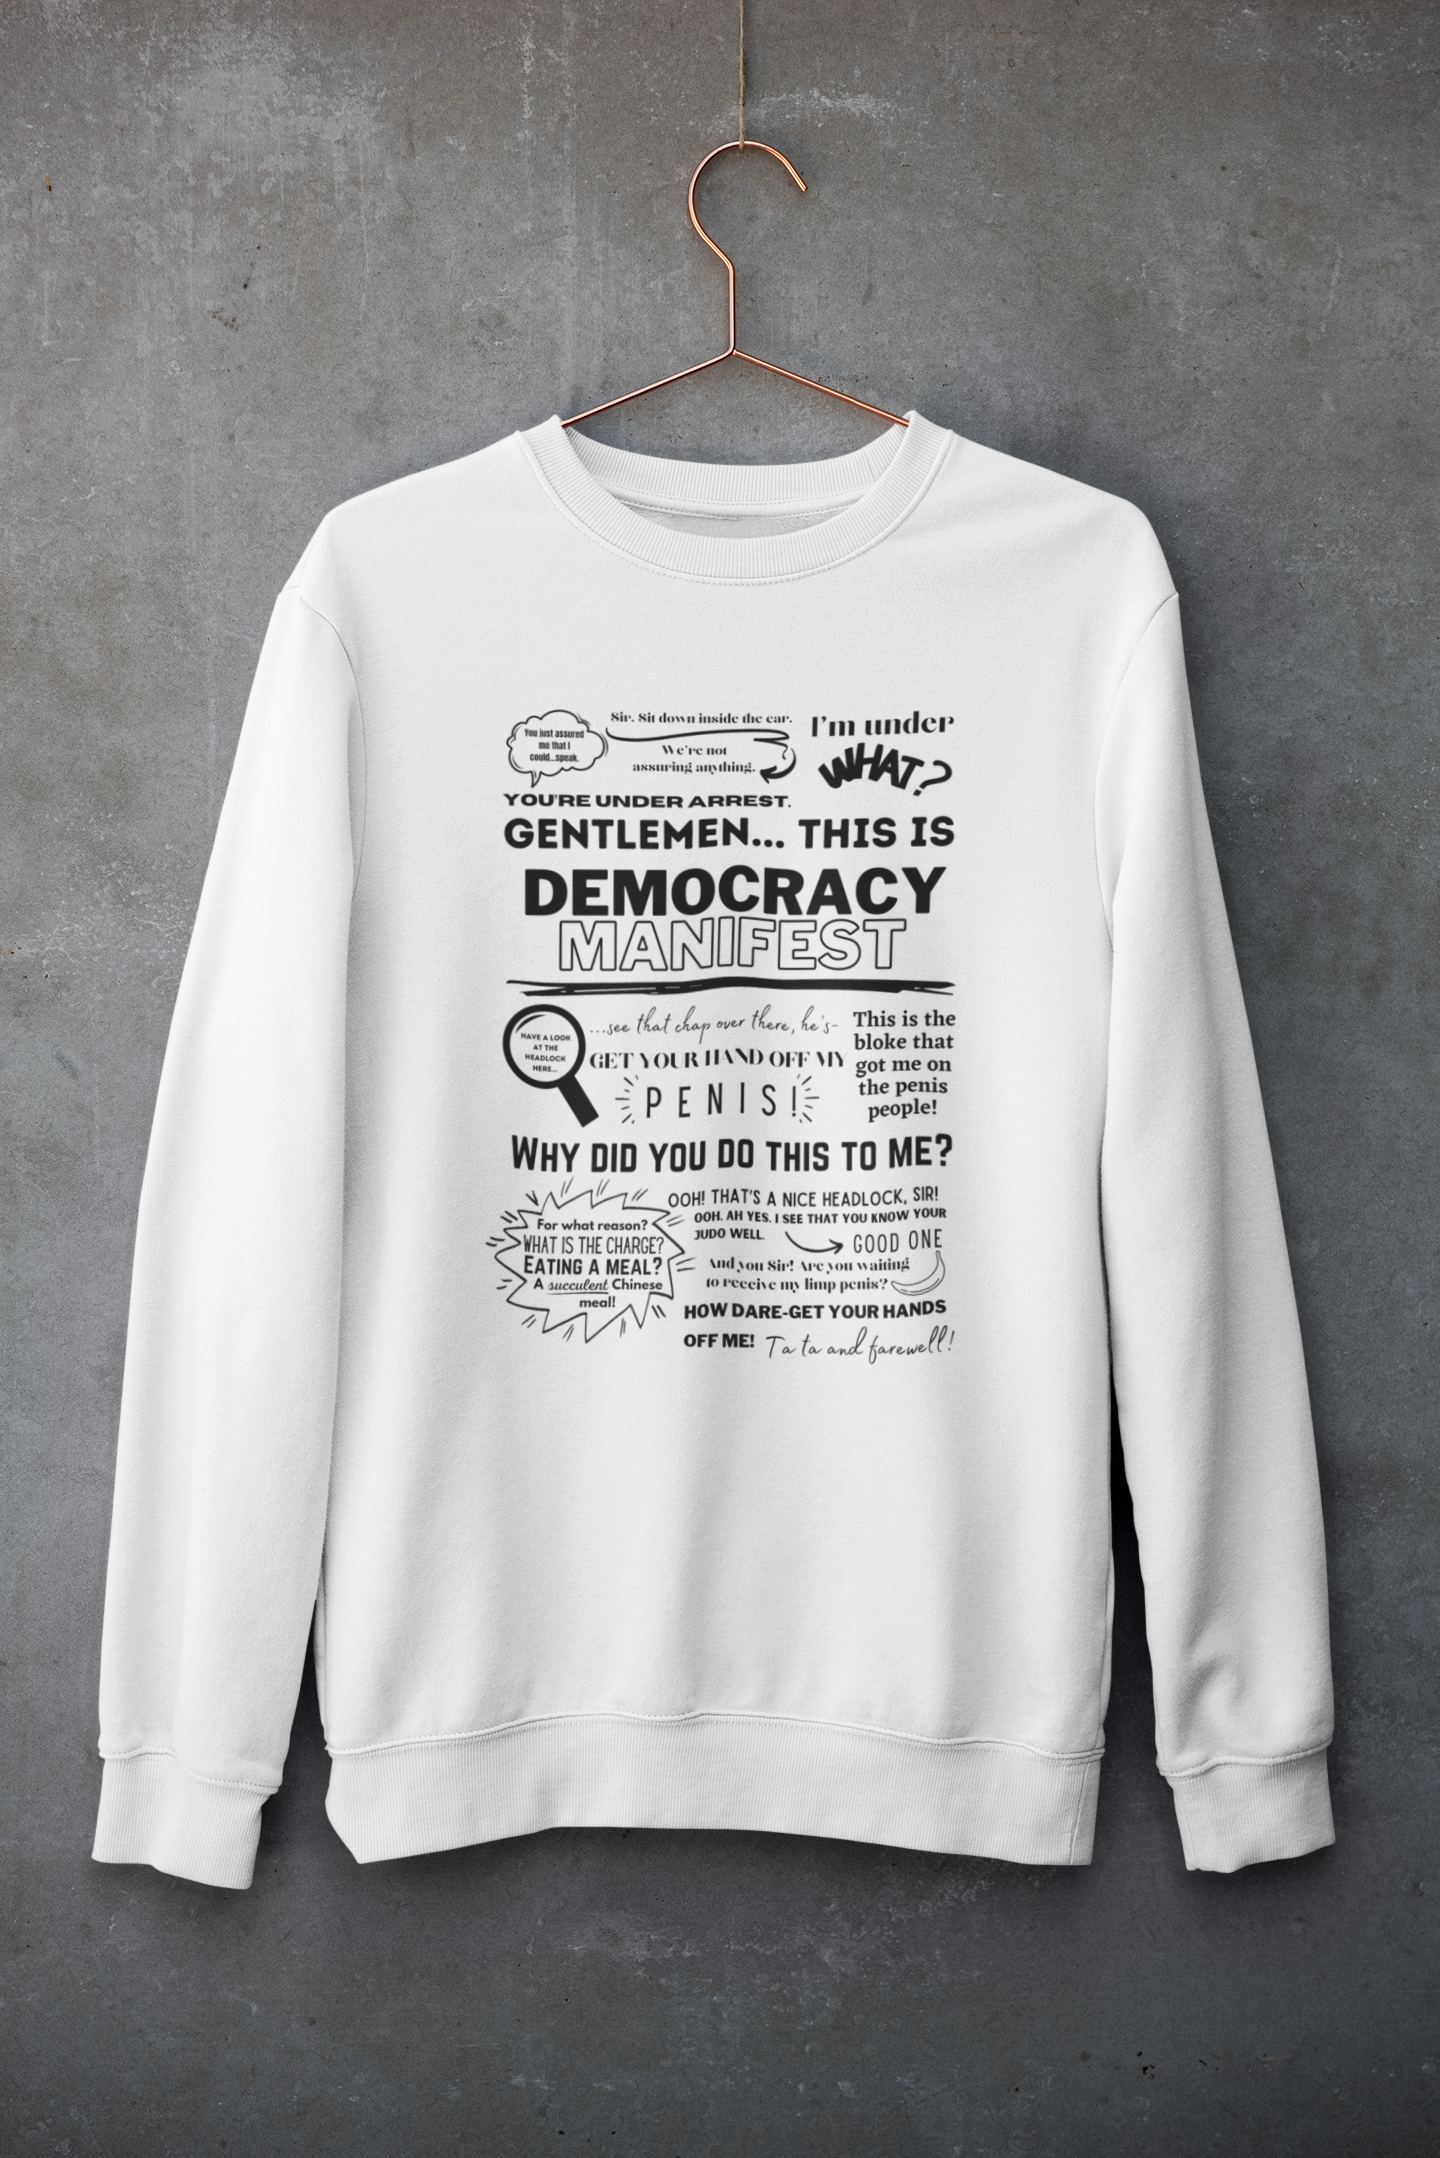 This is Democracy Manifest Sweatshirt